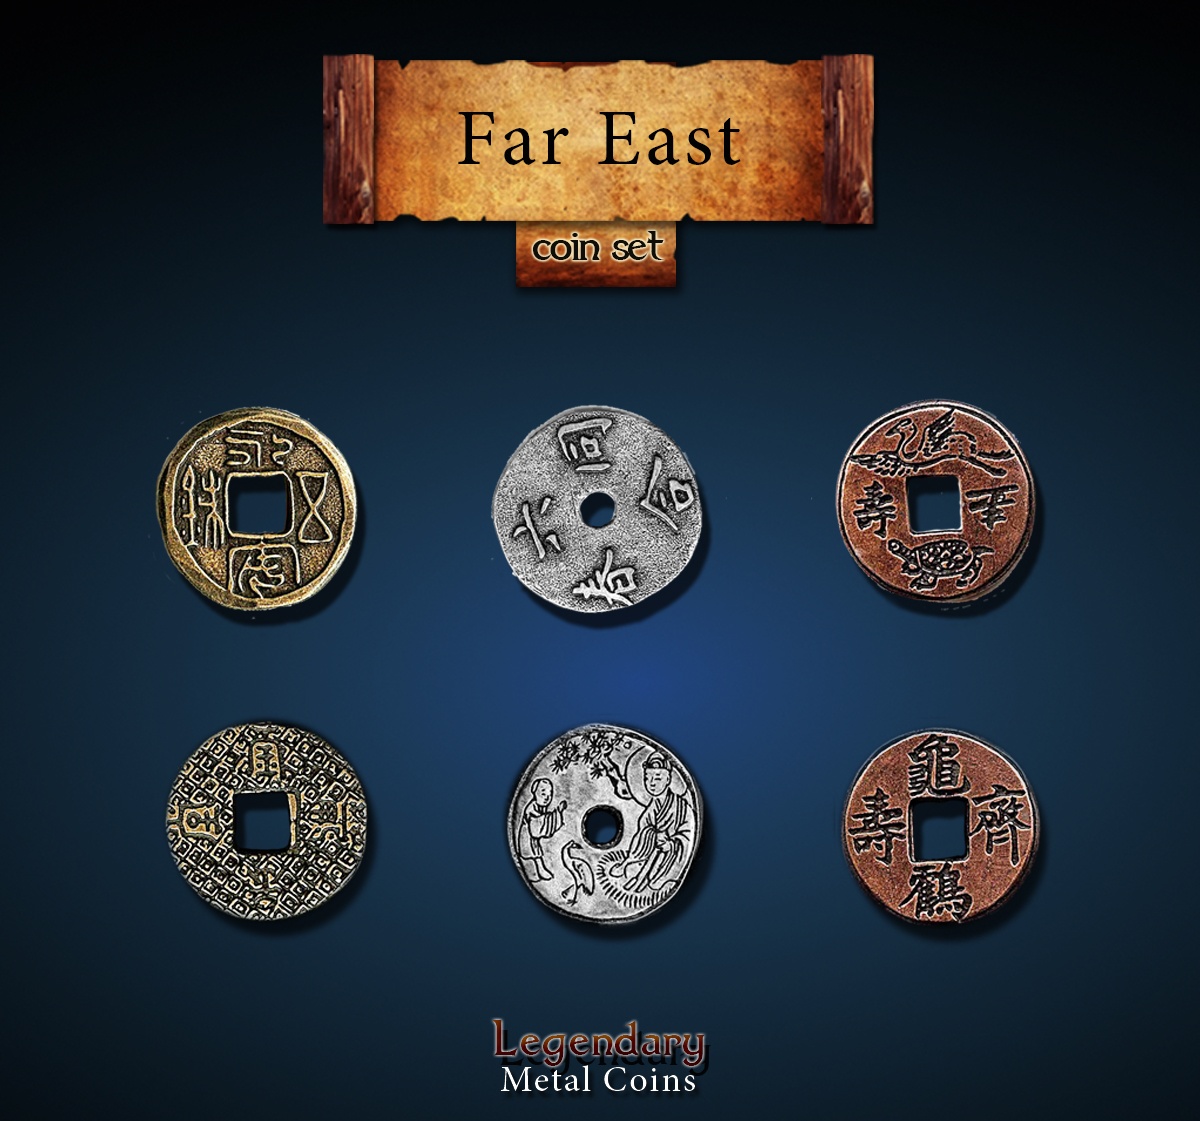 Far East Coin Set Legendary Metal Coins